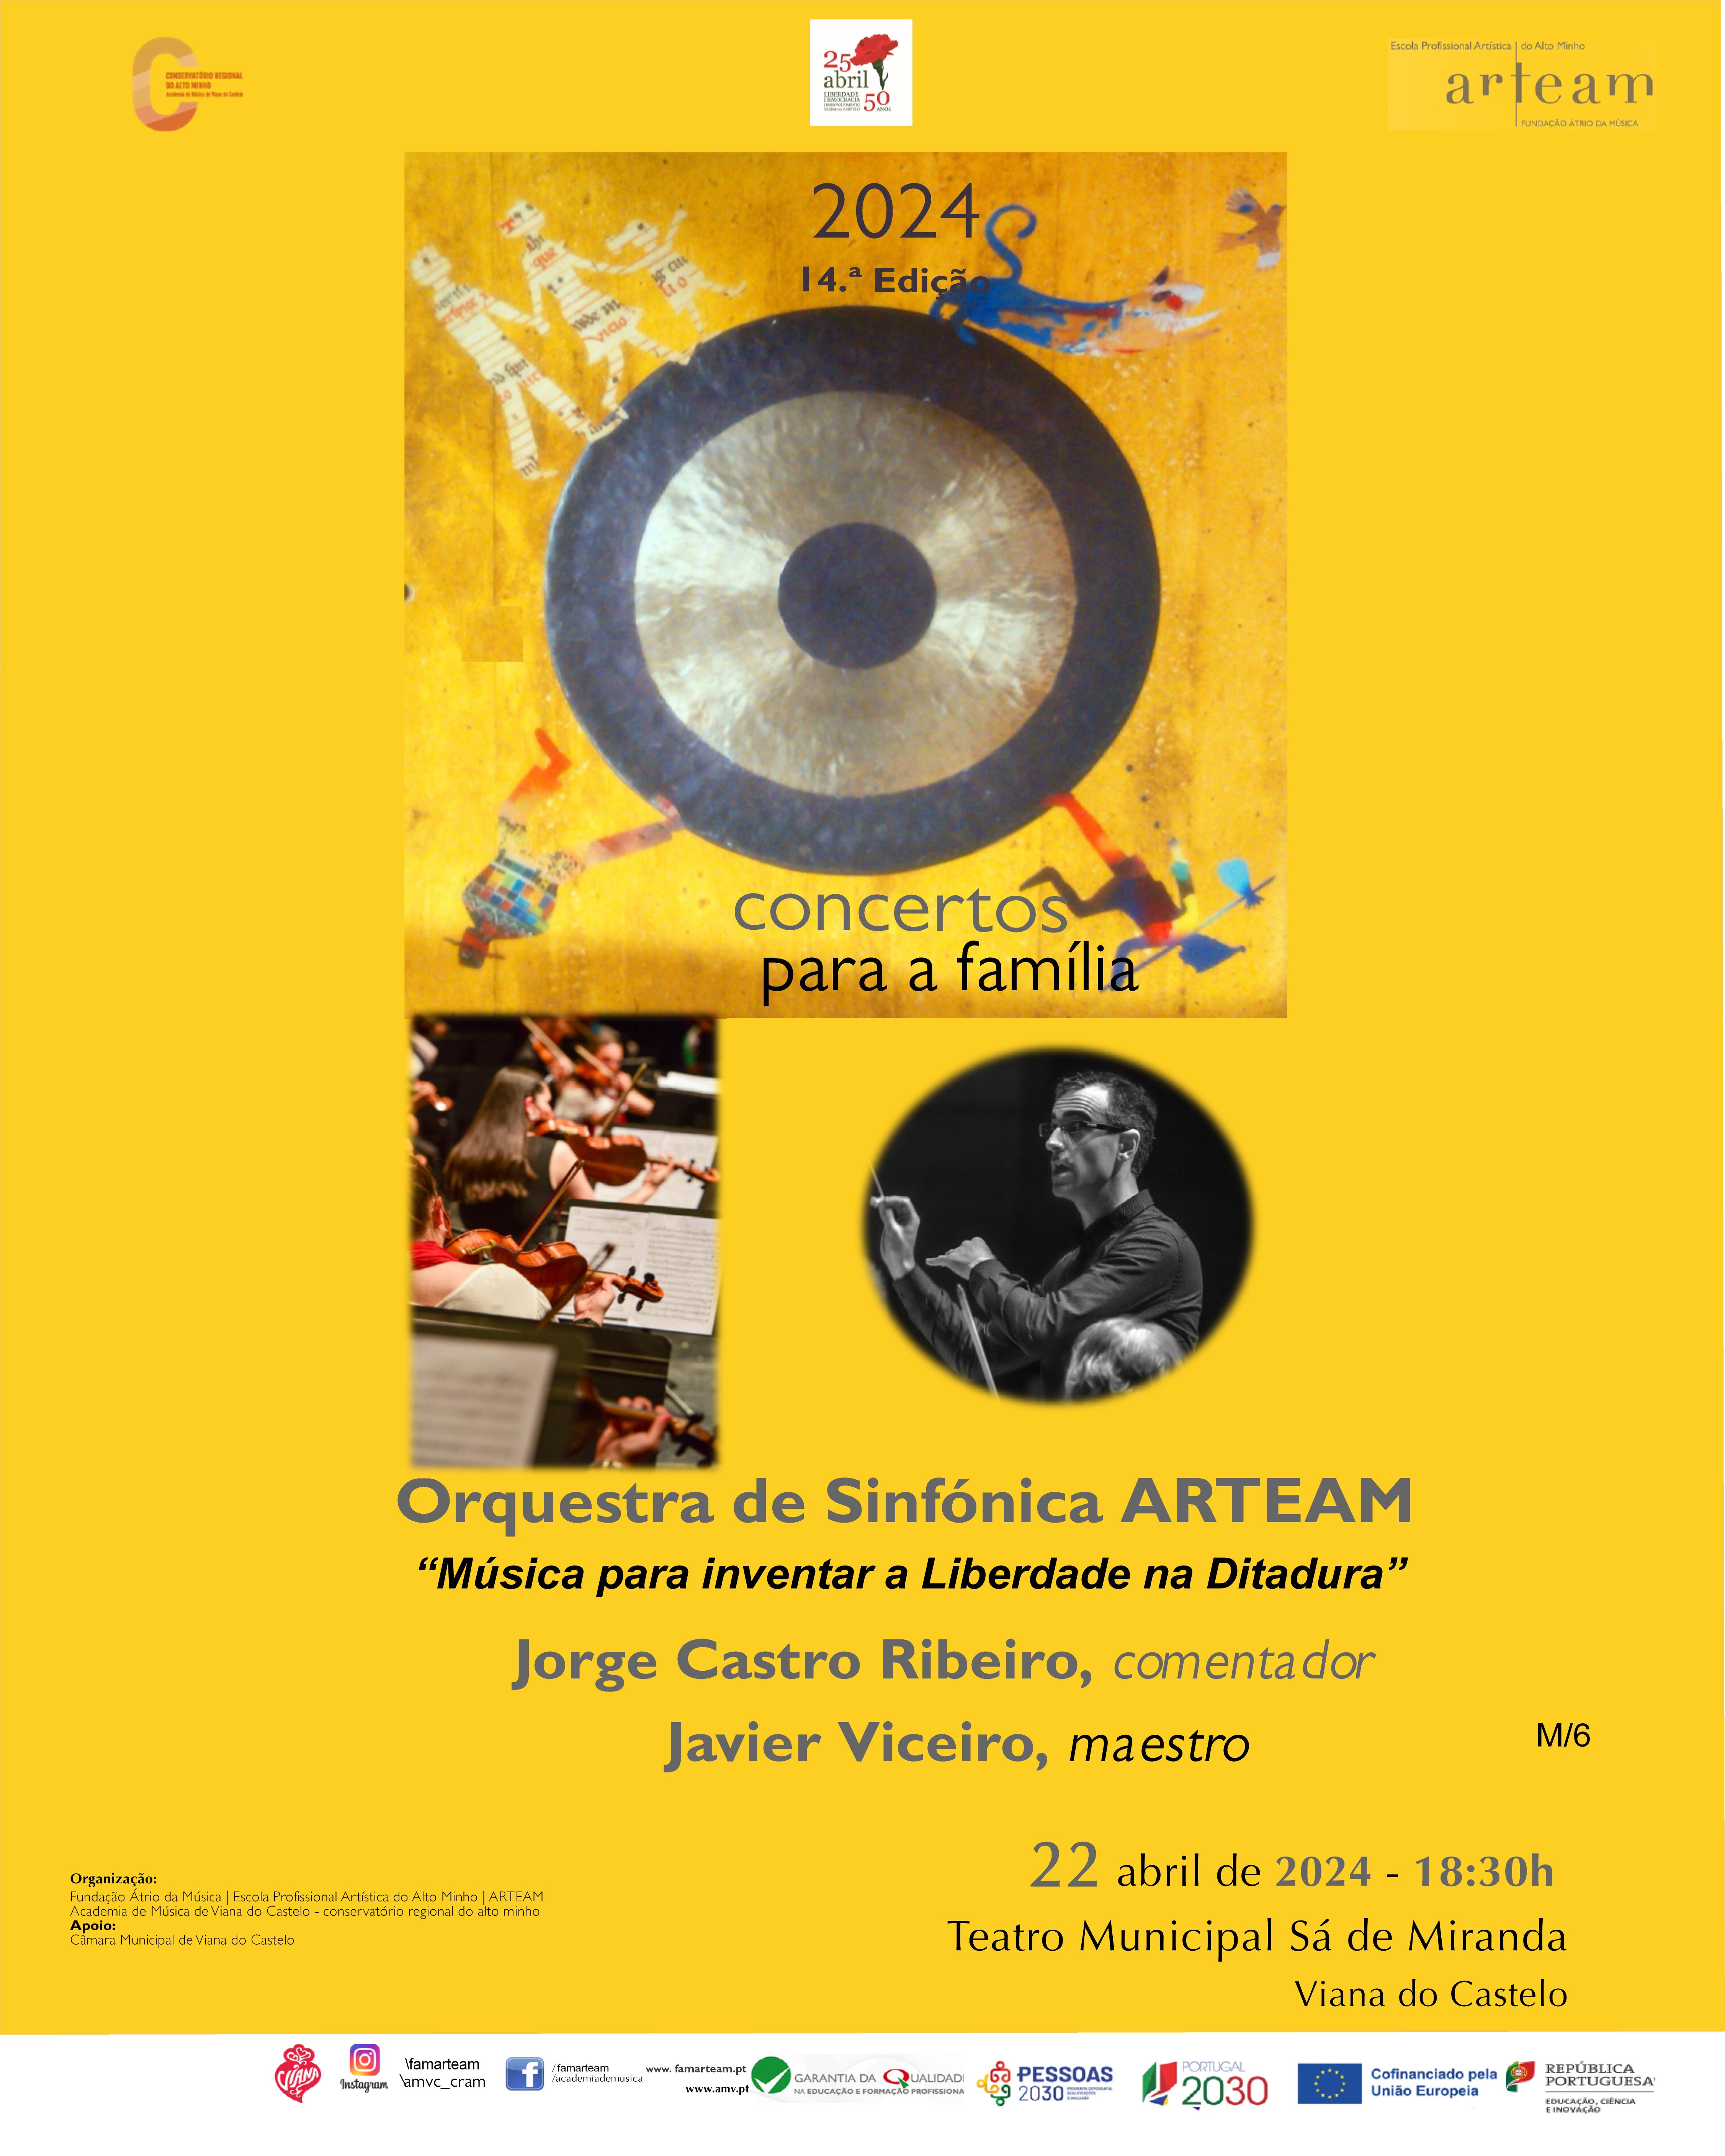 Concerto para a família, no Teatro Municipal Sá de Miranda, dia 22 abril, 18:30.